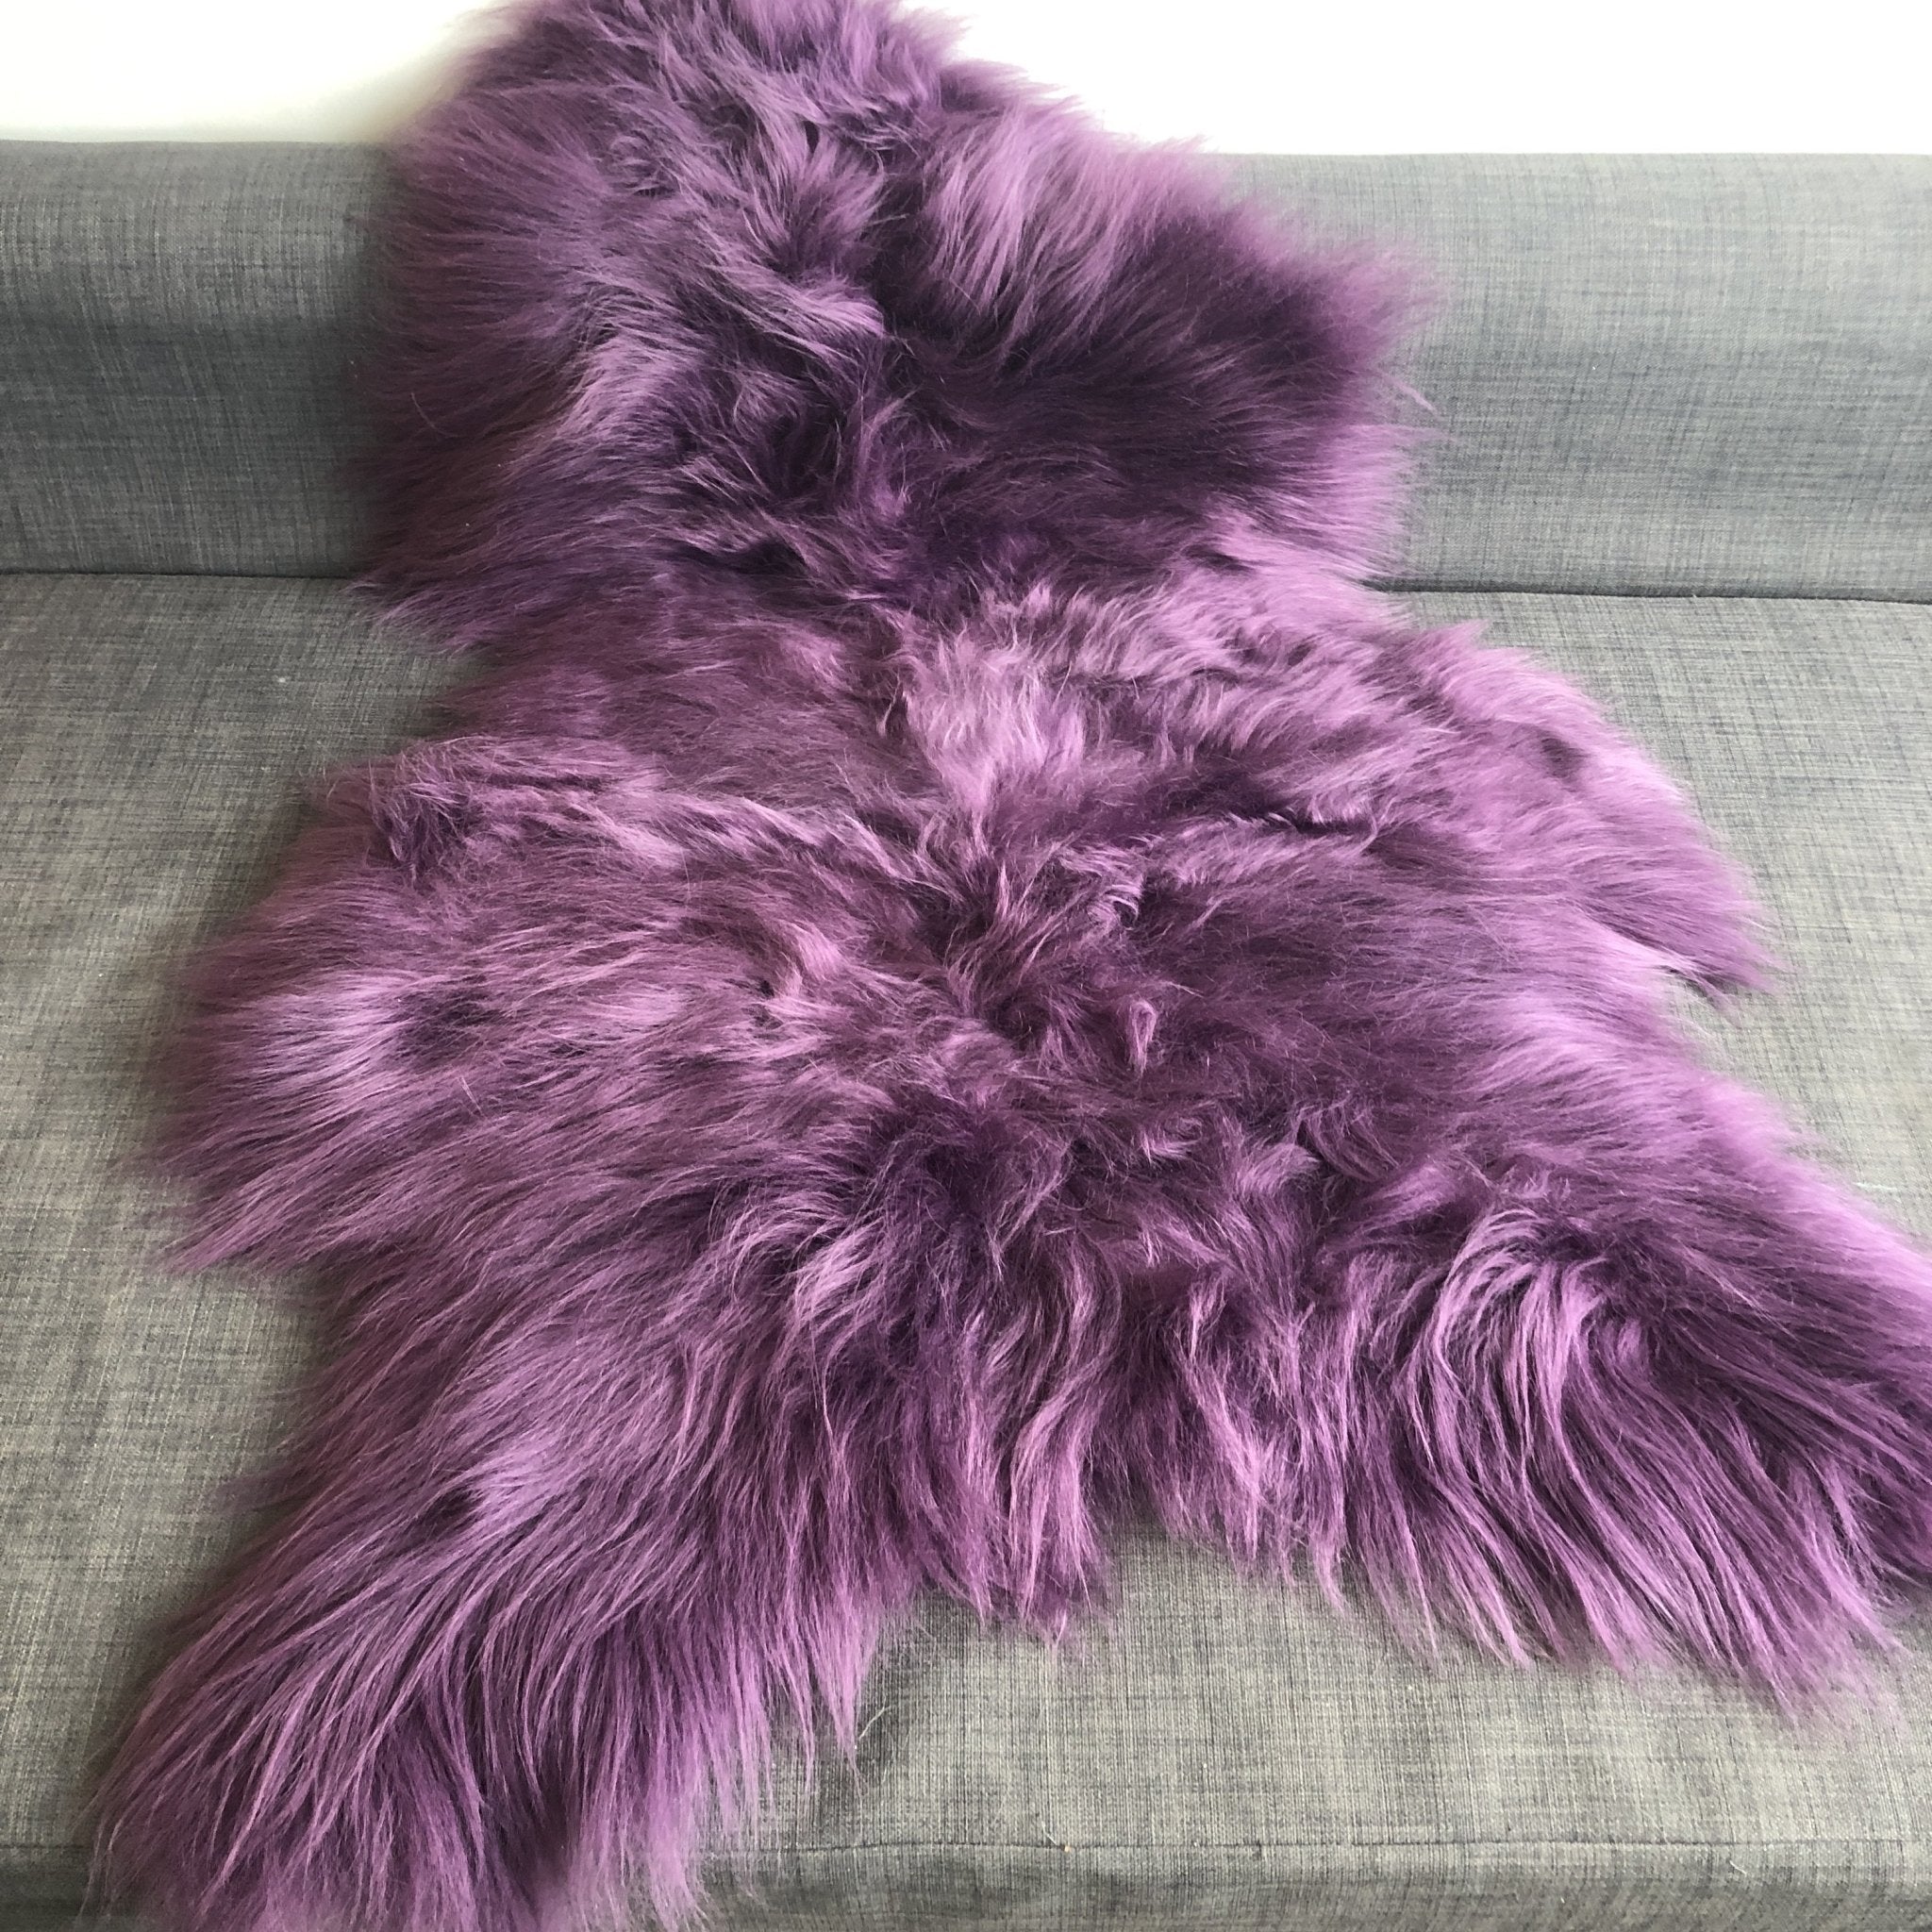 Swedish Sheepskin Rug African Violet Purple Long Fur Throw - Wildash London